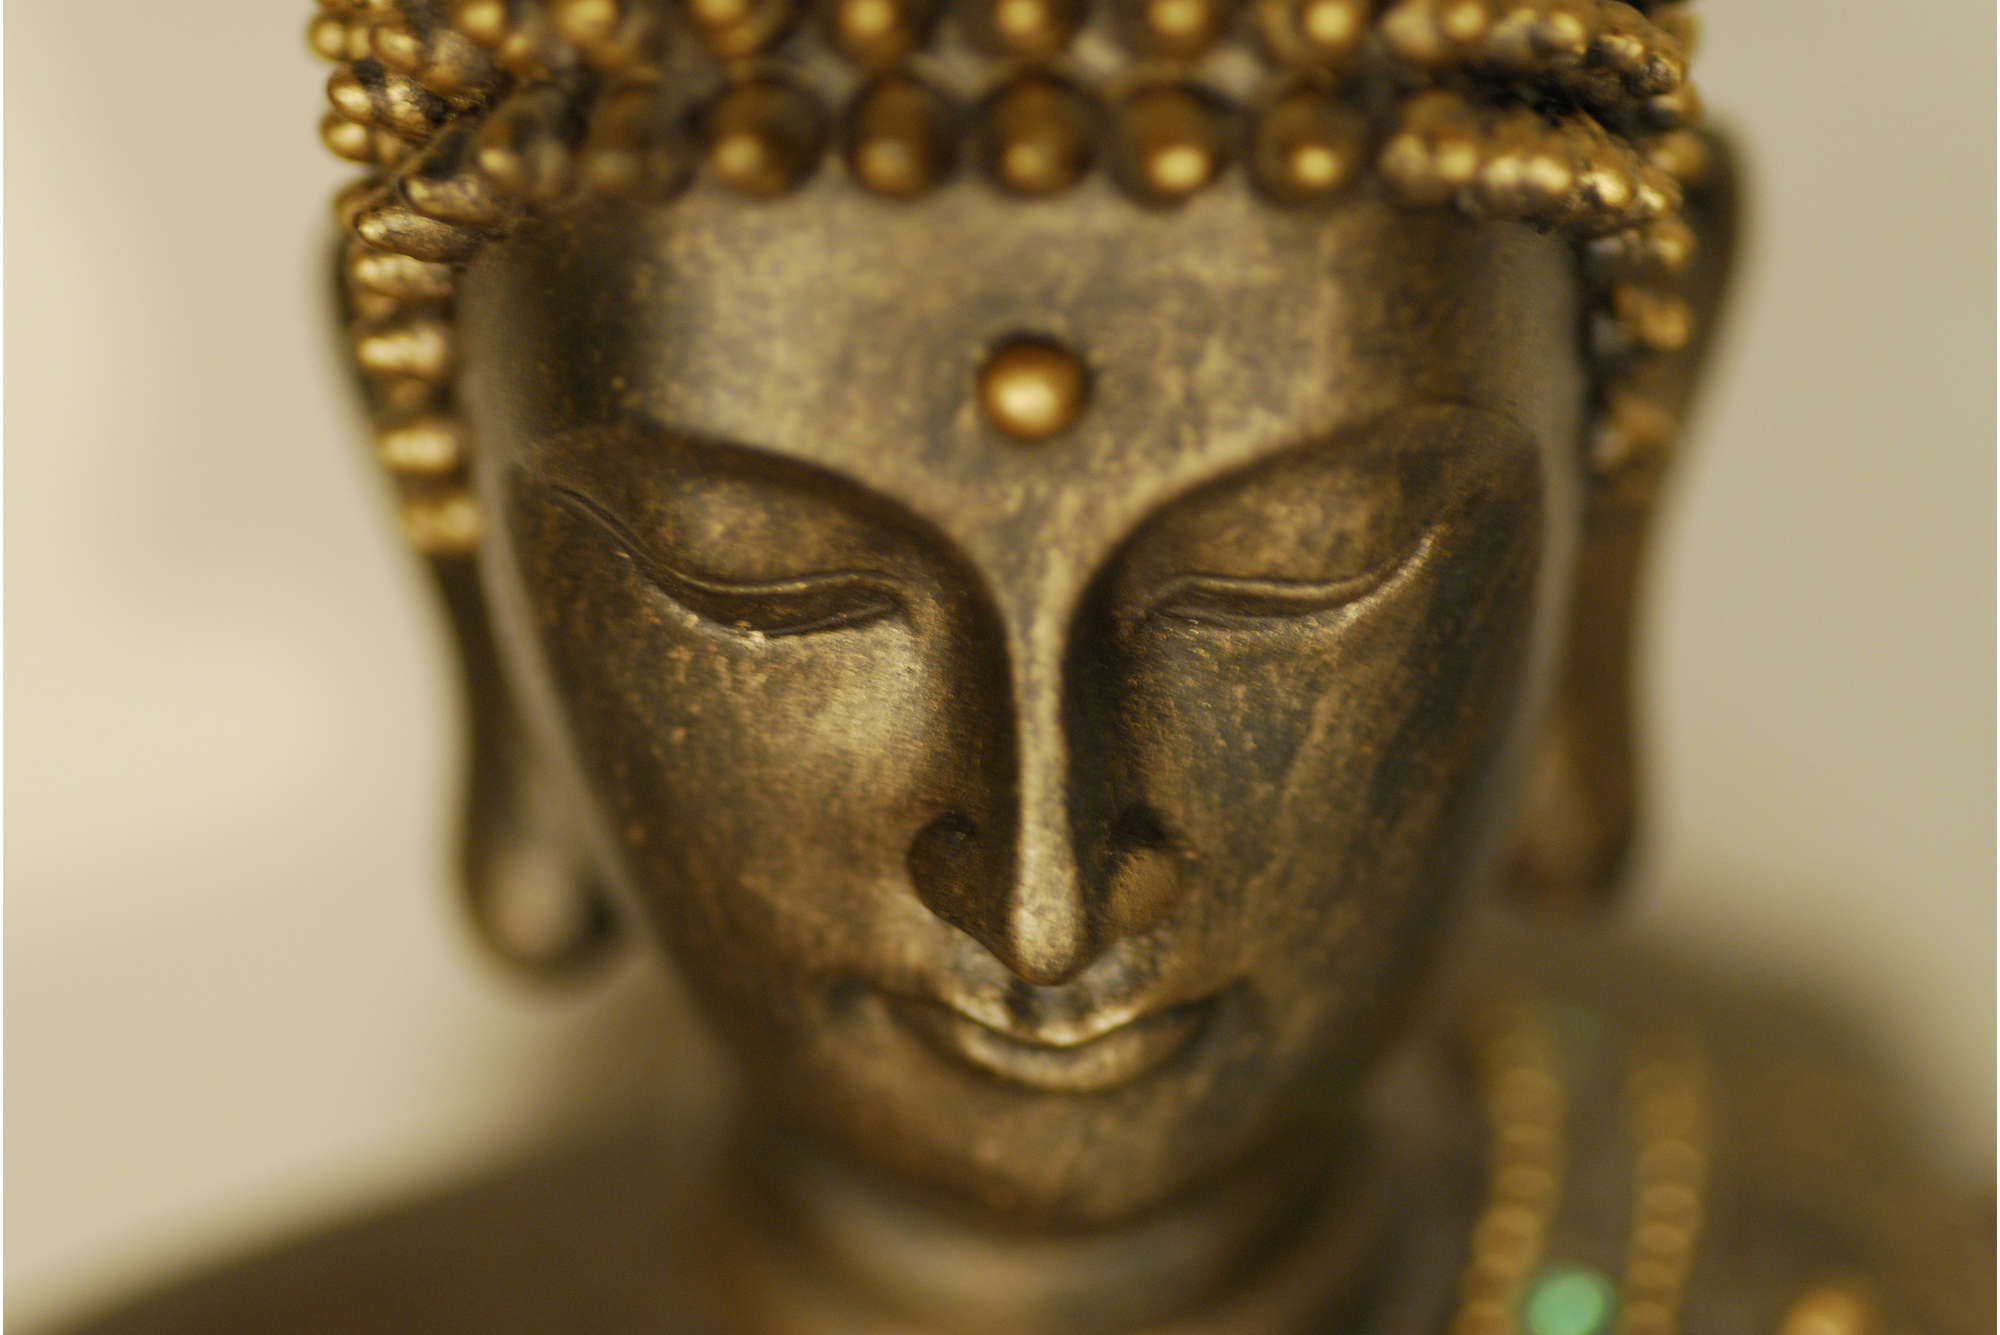             Fotobehang Close-up van Boeddha - structuurvlies
        